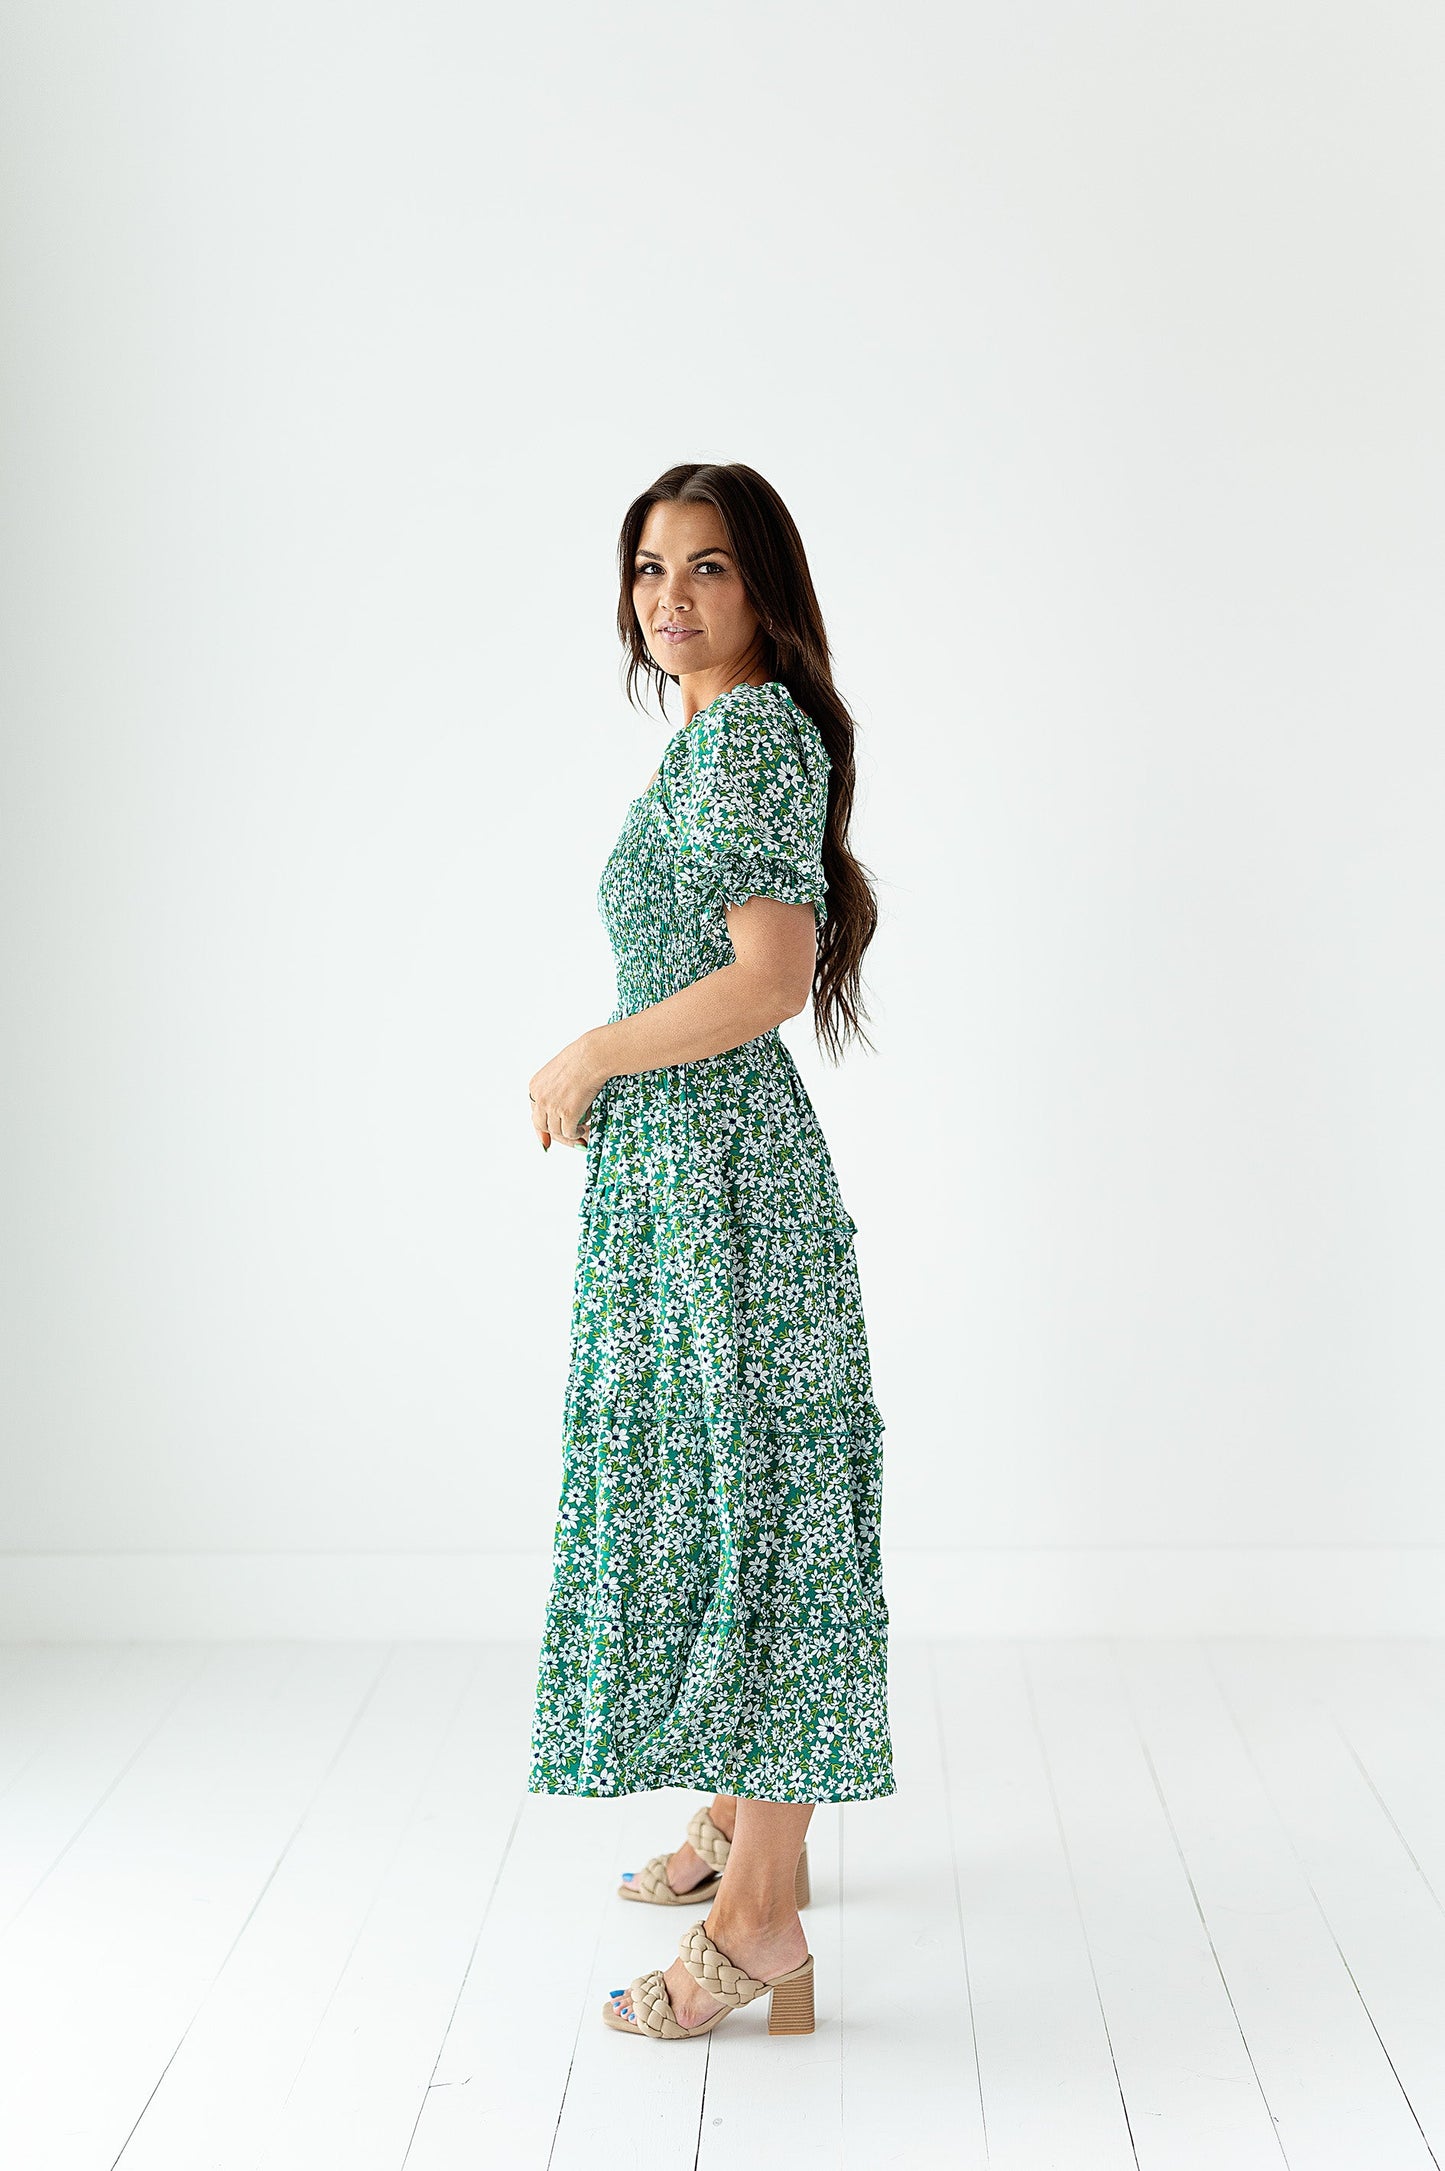 yayaq™-Gabrielle Floral Midi Dress in Turquoise